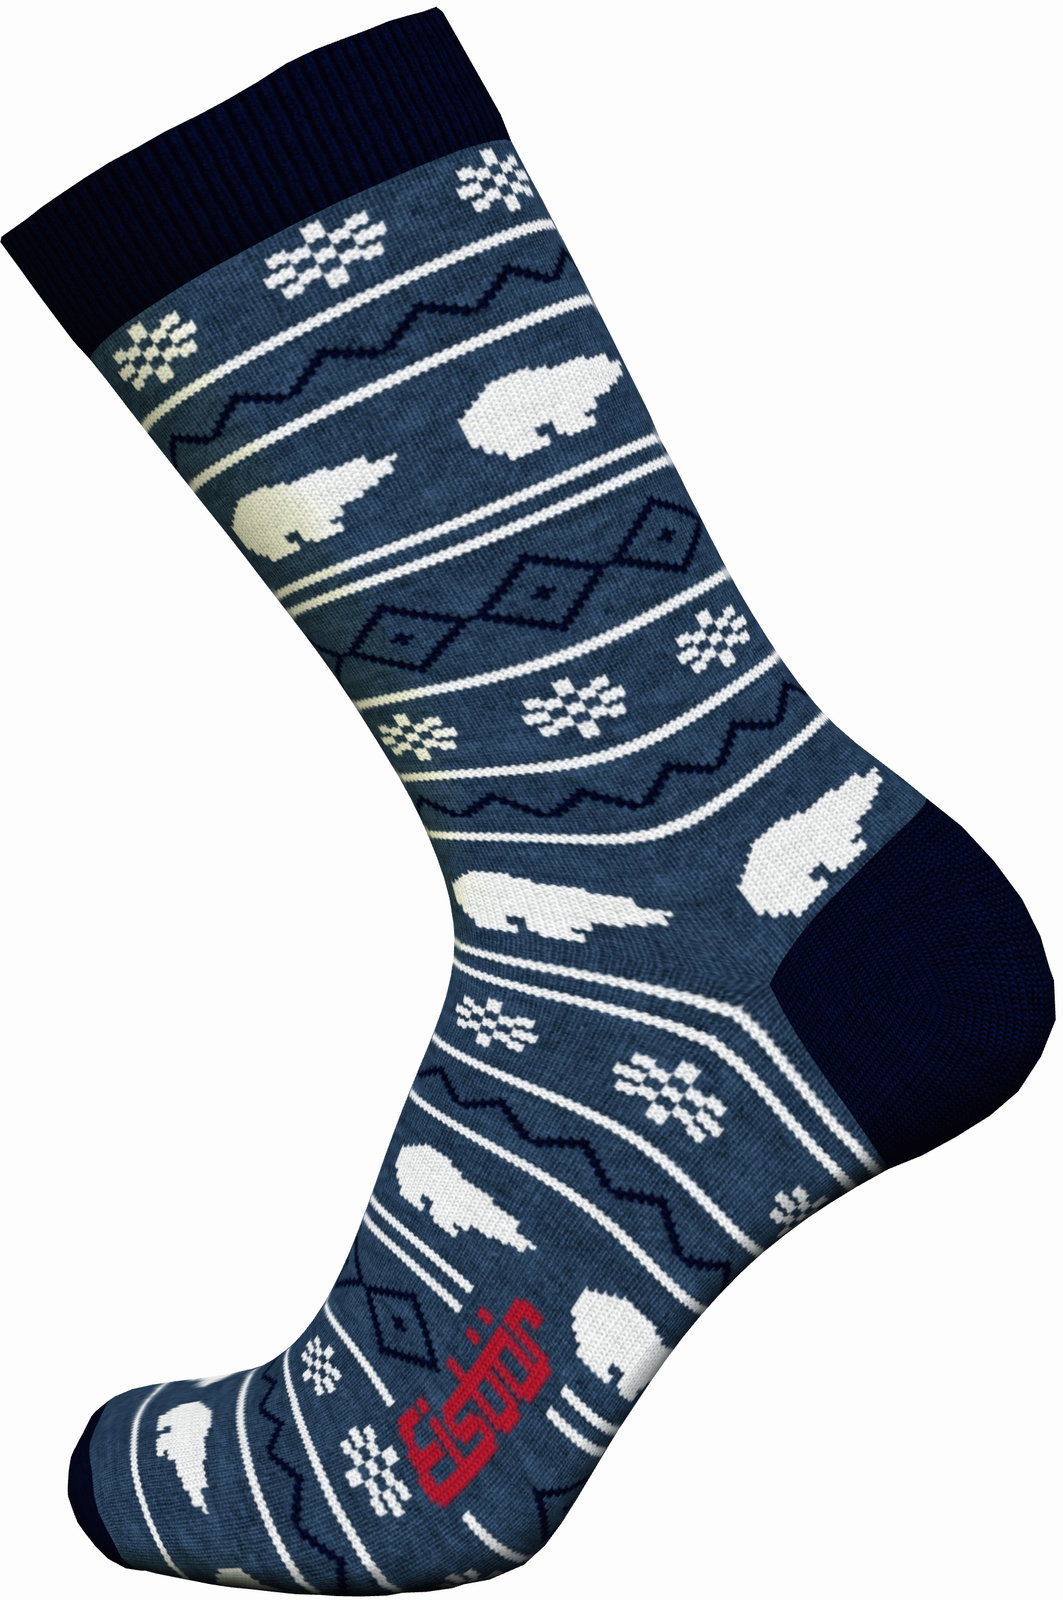 СКИ чорапи Eisbär Lifestyle Jacquard Avio/Navy-Grey/White 39-42 СКИ чорапи